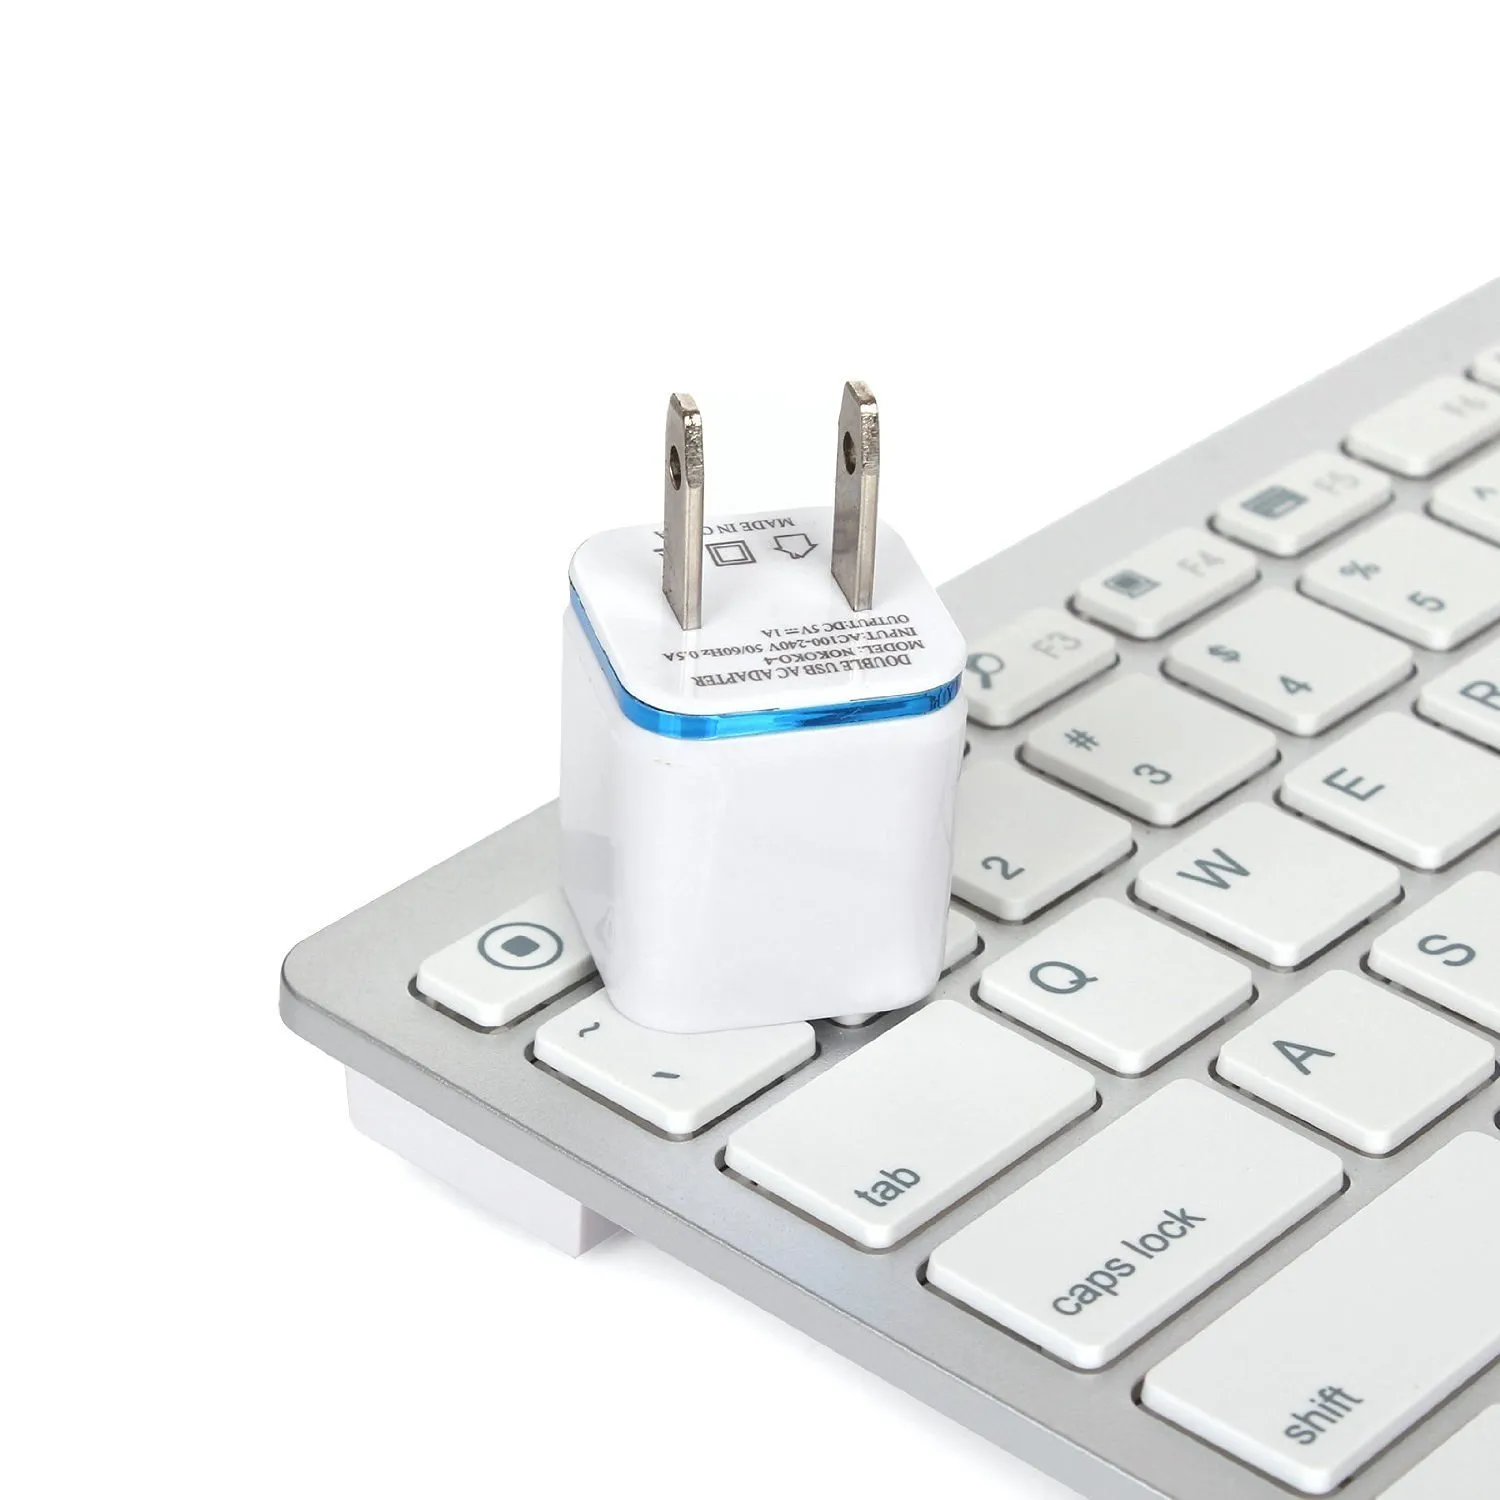 Kleurrijke Home Plug USB-oplader voor Samsung Note 5 USA versie iPhone 7 6 5 Universl Wall Charger Travel Adapter / 